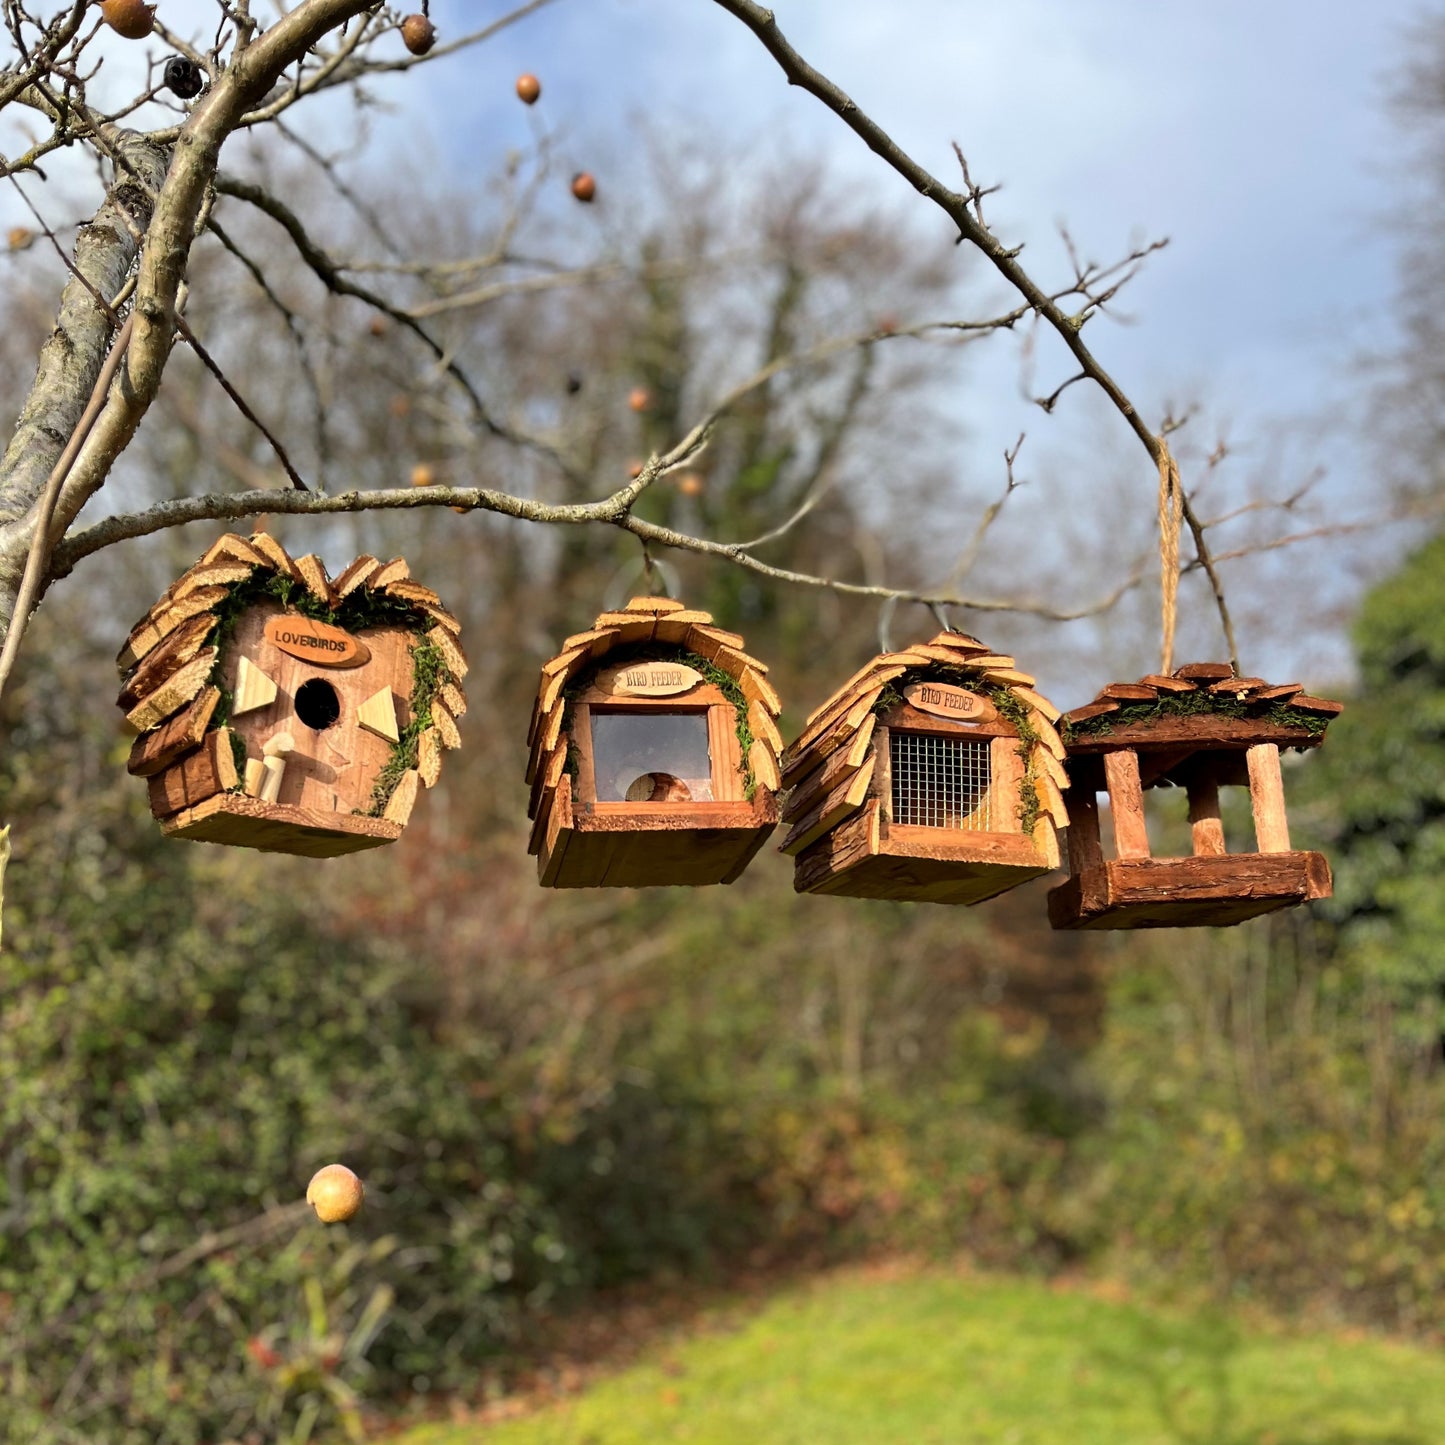 Wooden Bird Table, Love Bird Nest, Seed & Nut Feeder Set